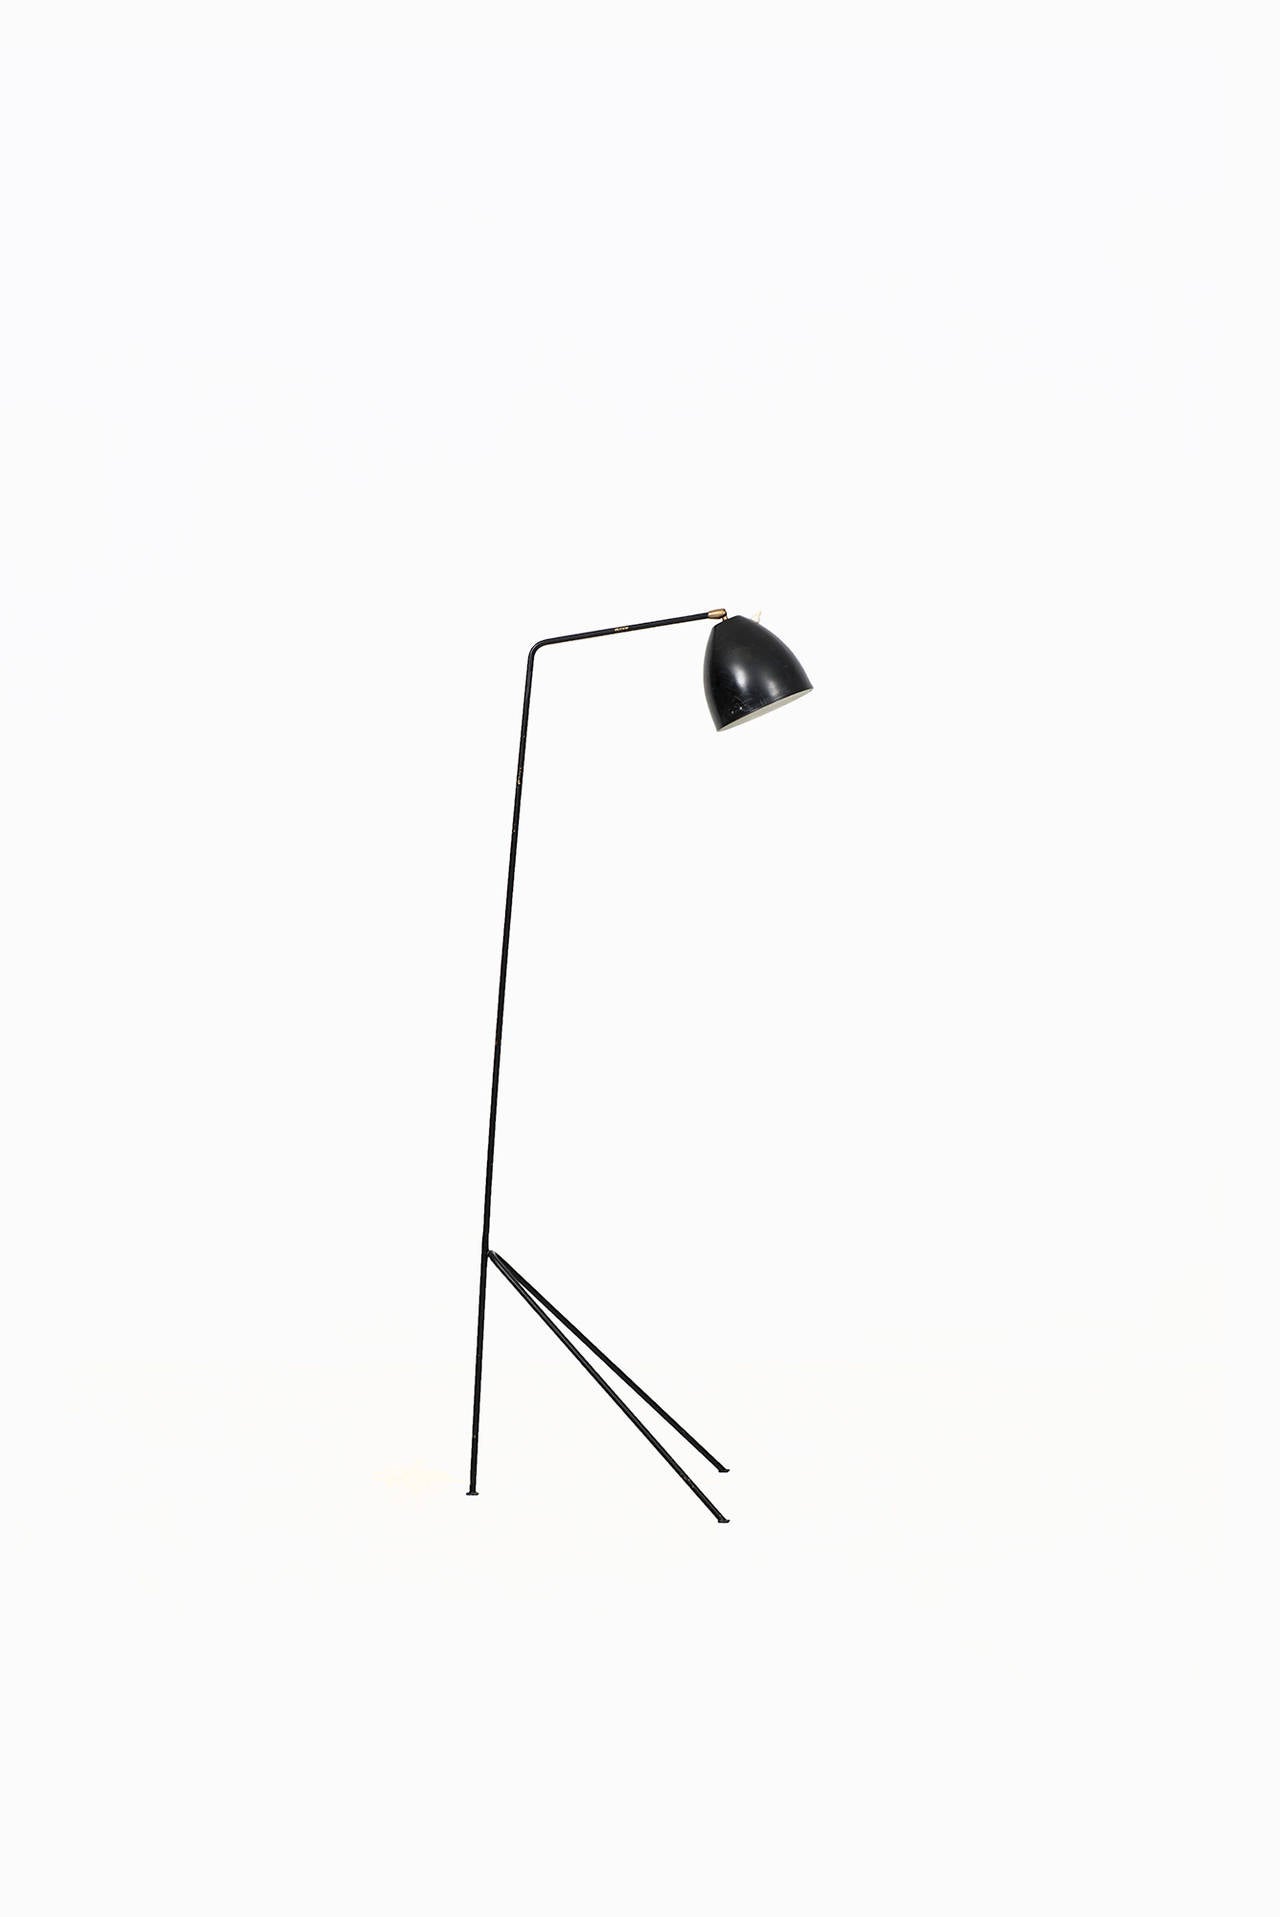 Swedish Midcentury Floor Lamp in the Manner of Greta Grossman